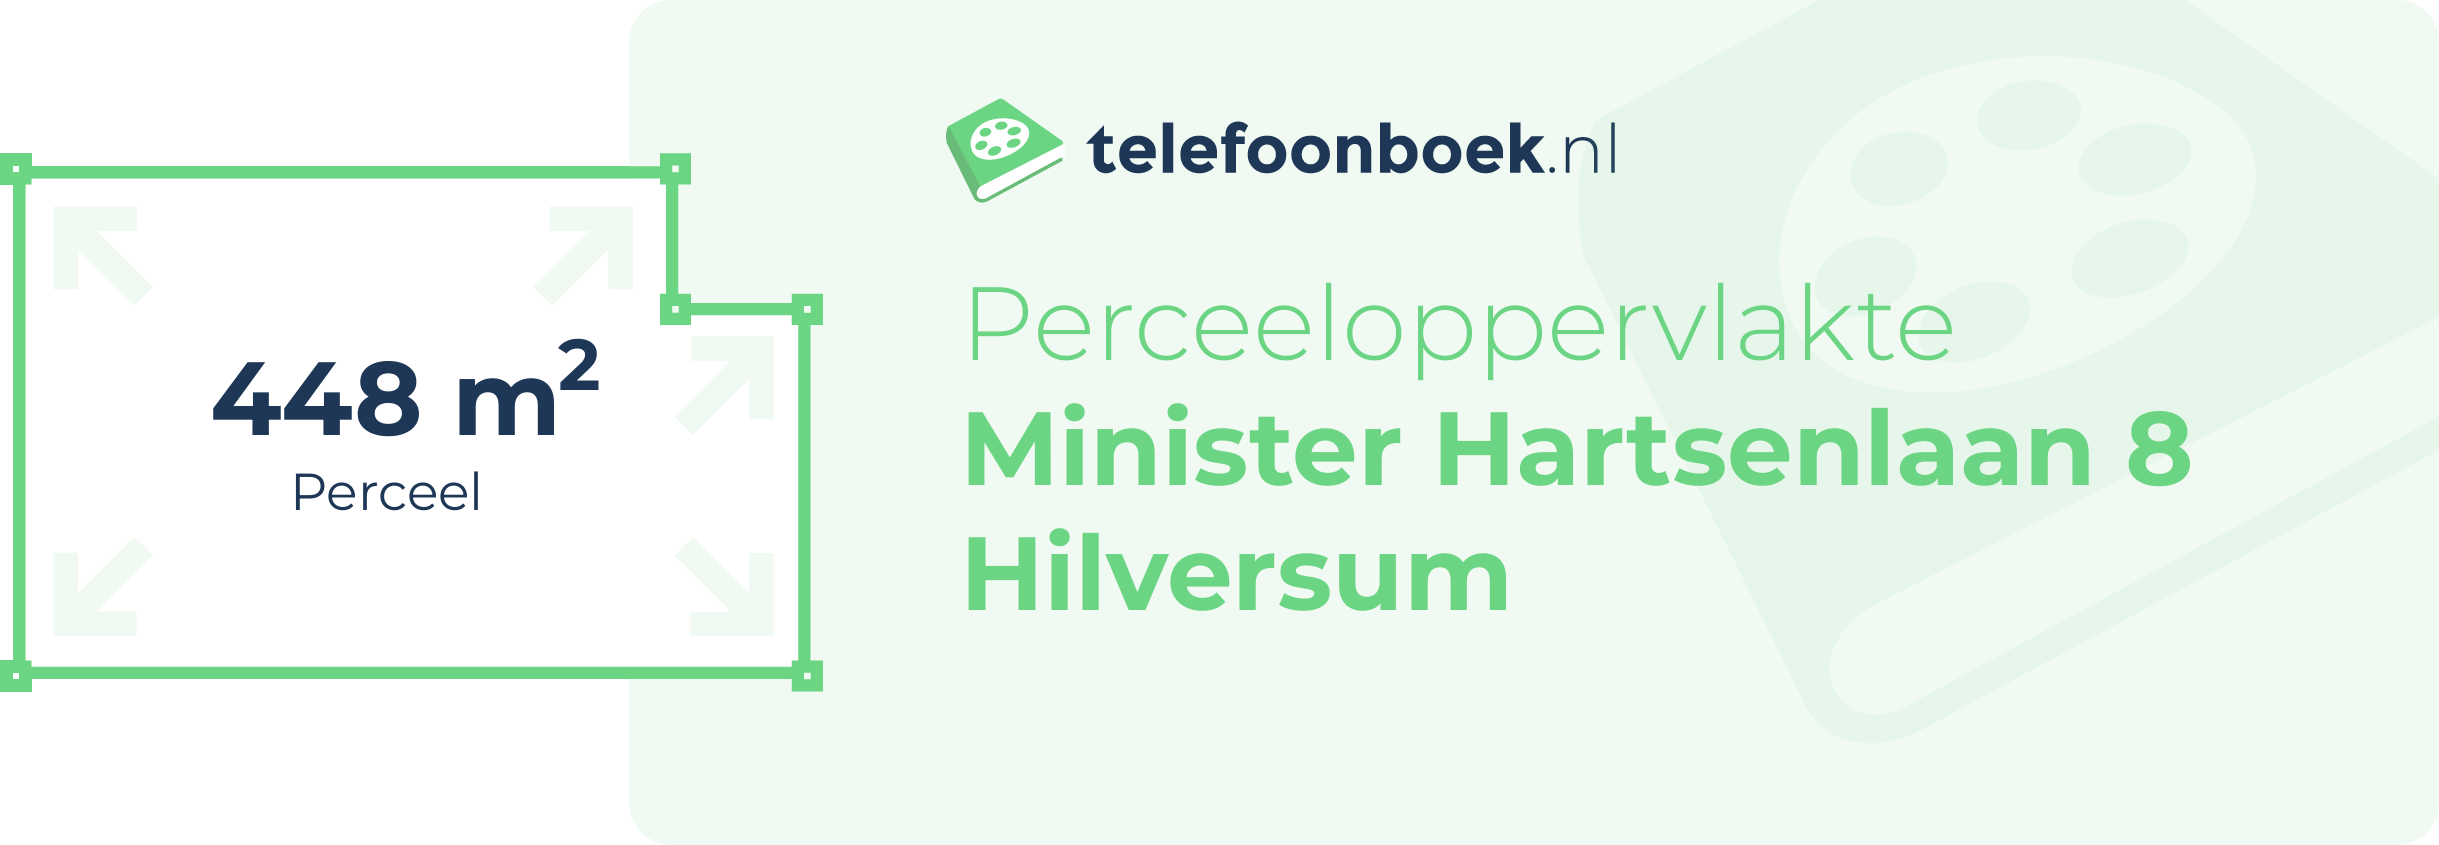 Perceeloppervlakte Minister Hartsenlaan 8 Hilversum